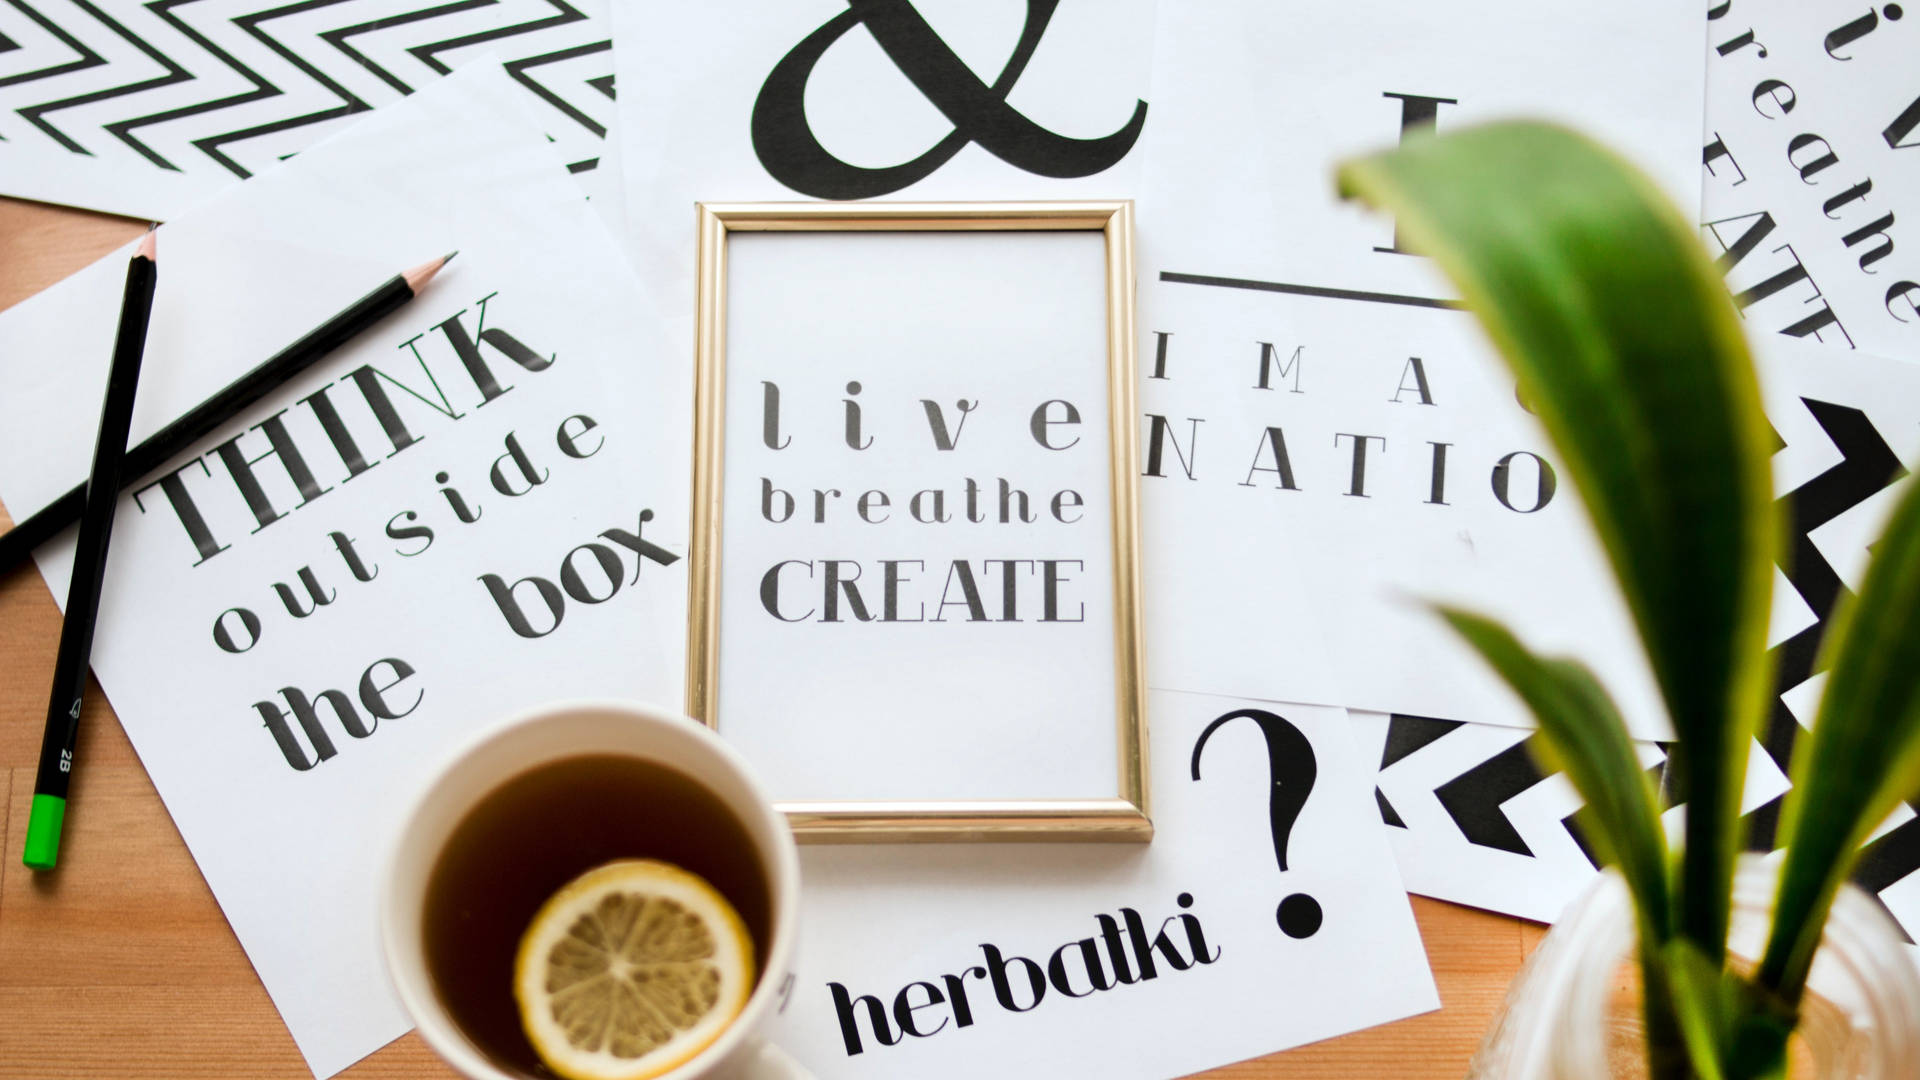 Live Breathe Create 4k Ultra Hd Motivational Wallpaper